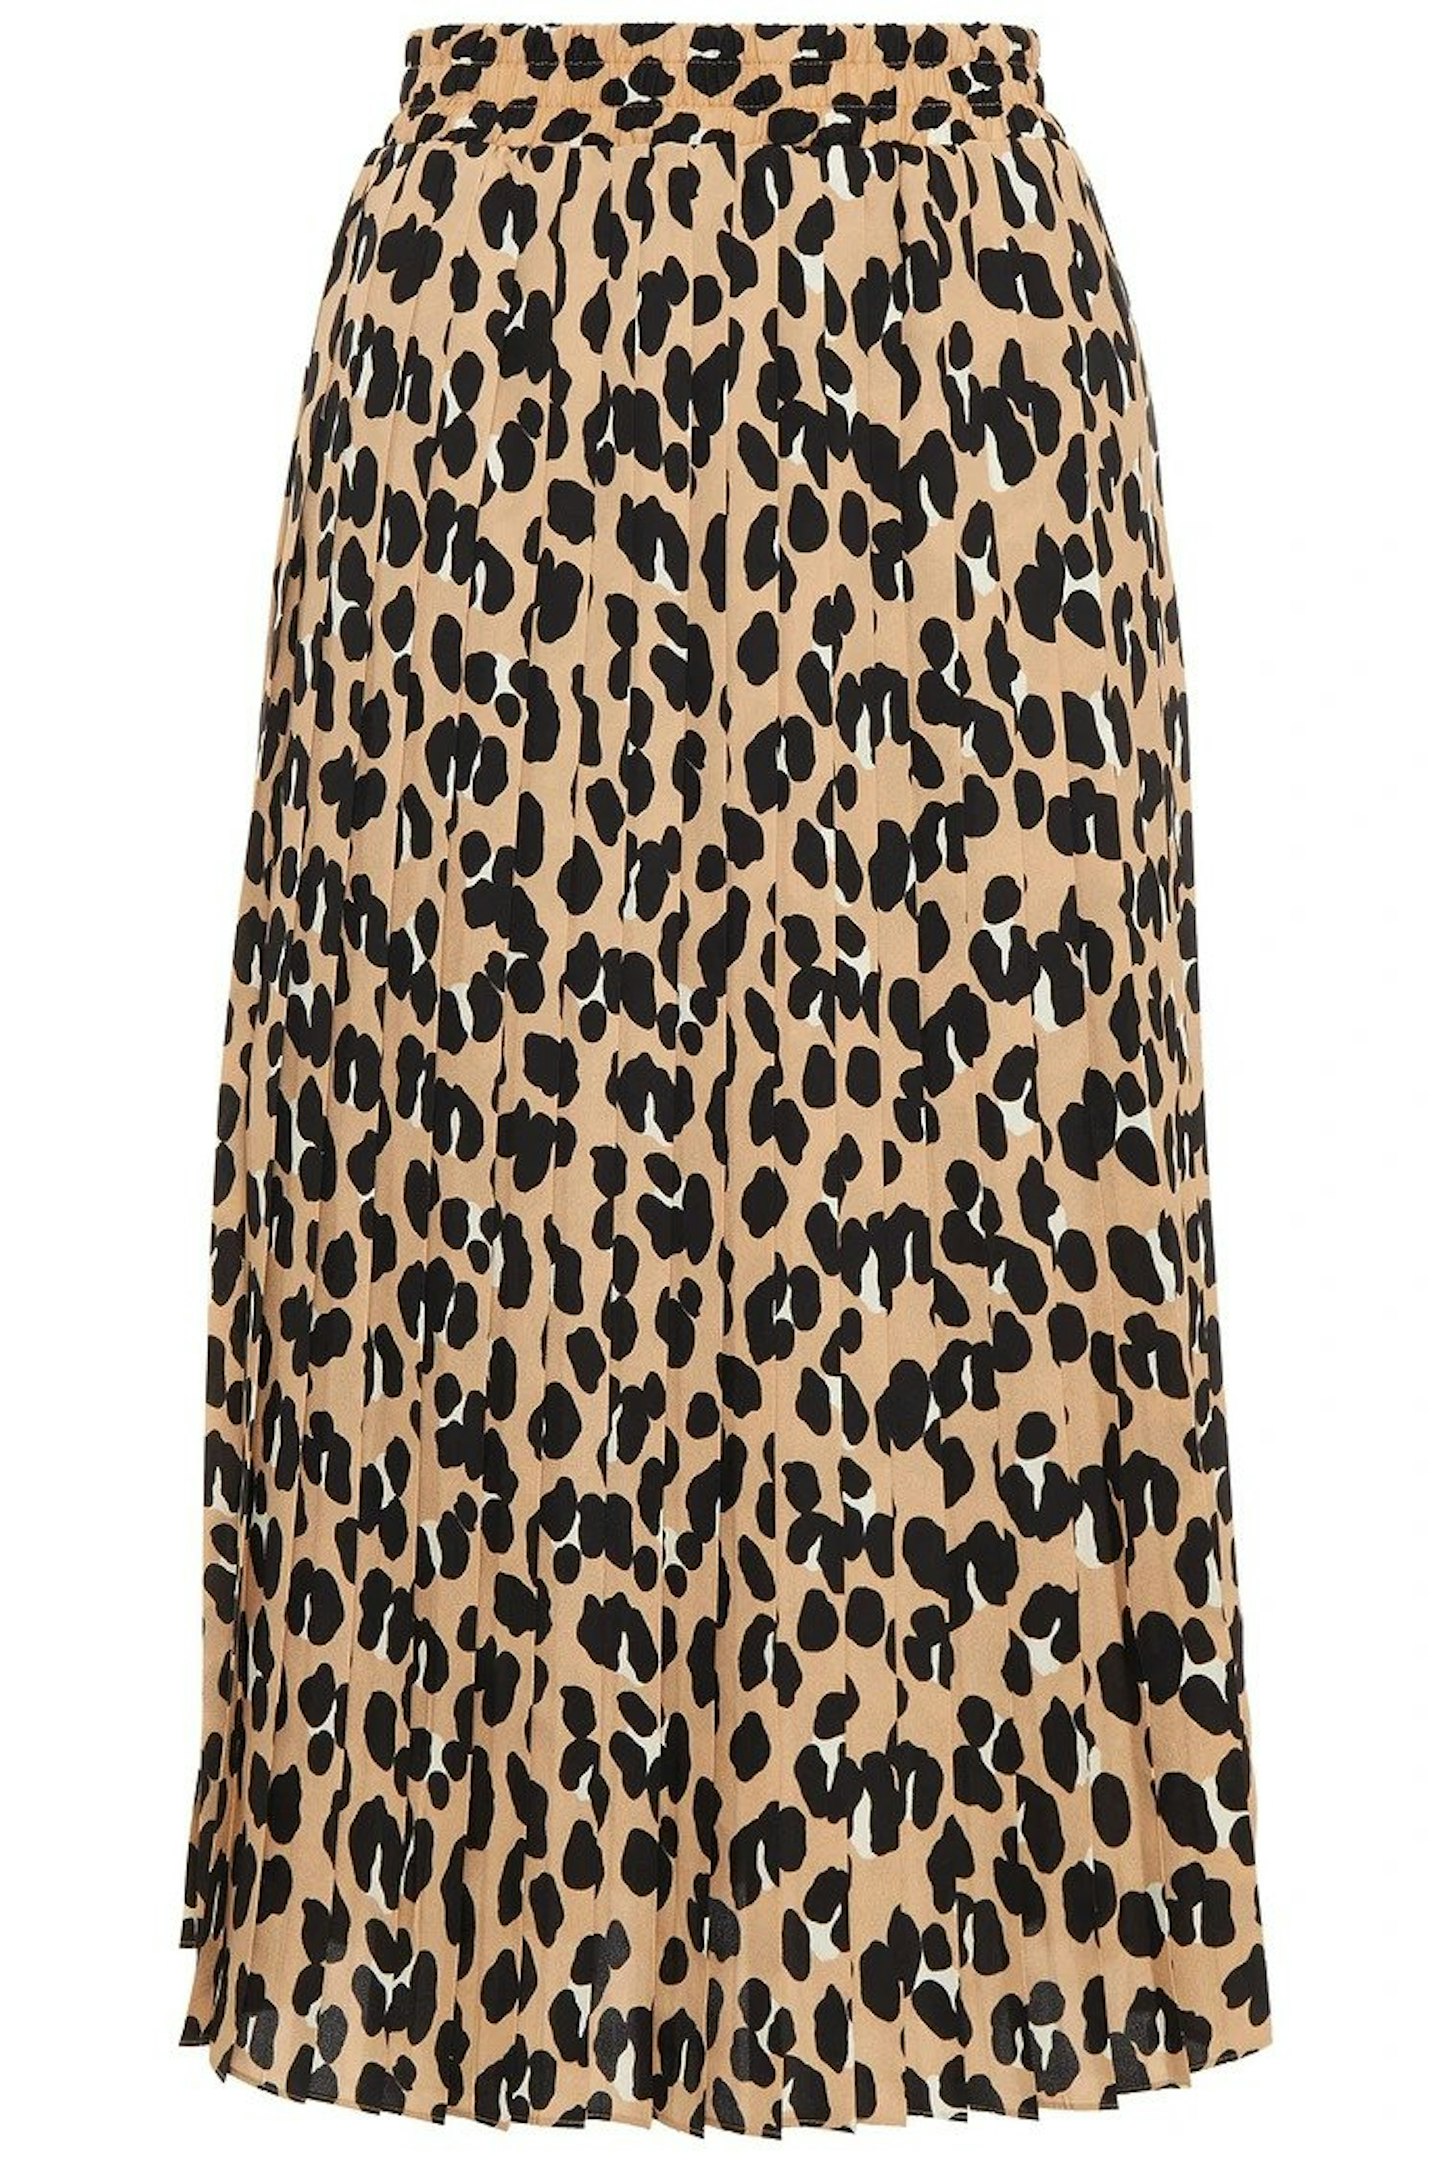 Kate Spade, Animal Crepe Midi Skirt, £147 at The Outnet